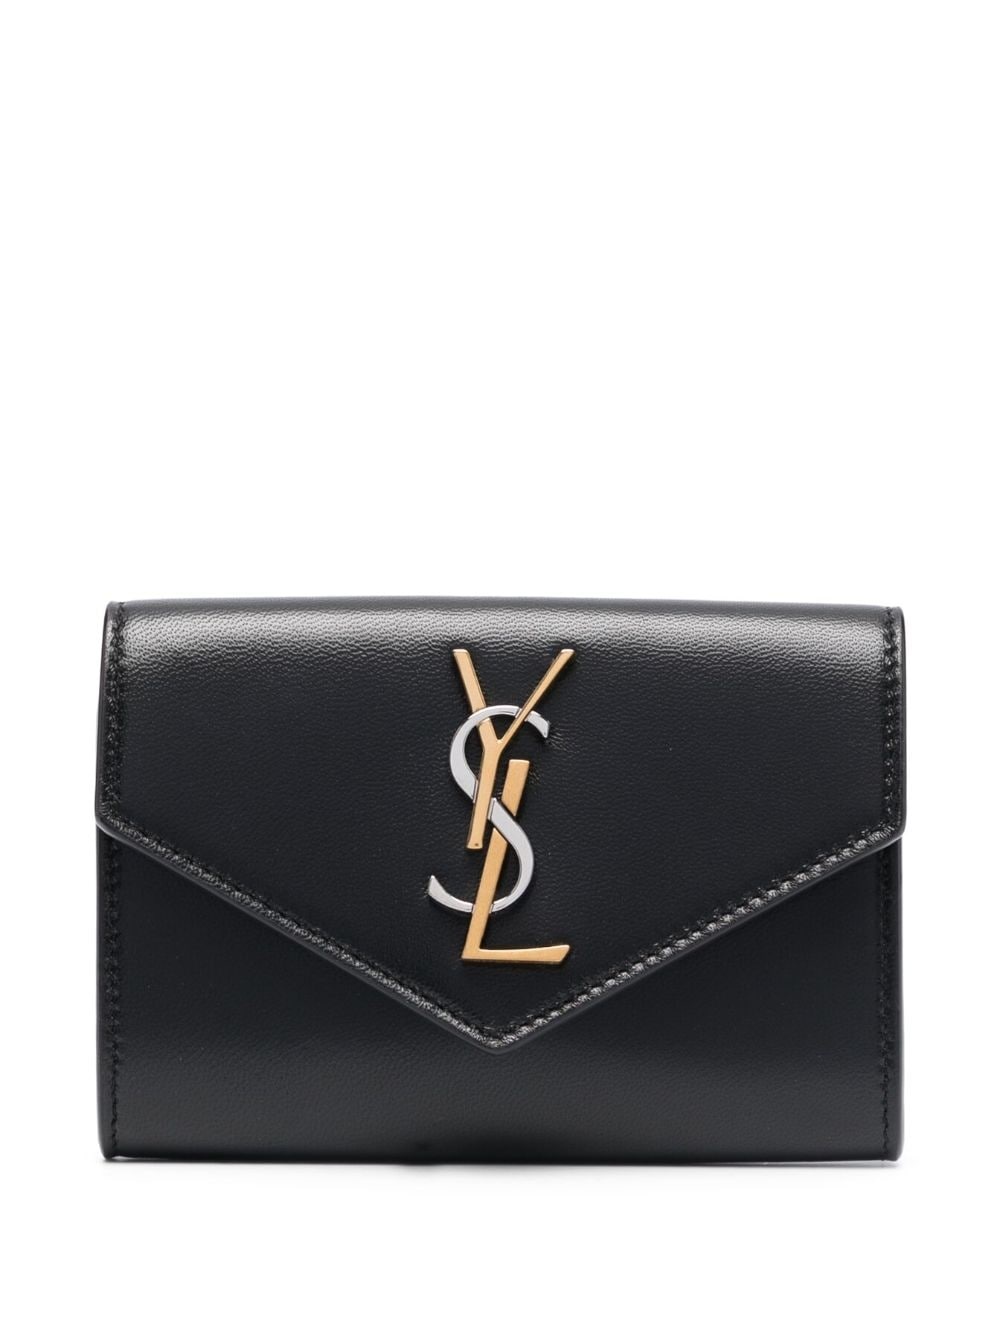 YSL logo-plaque leather bag - 1